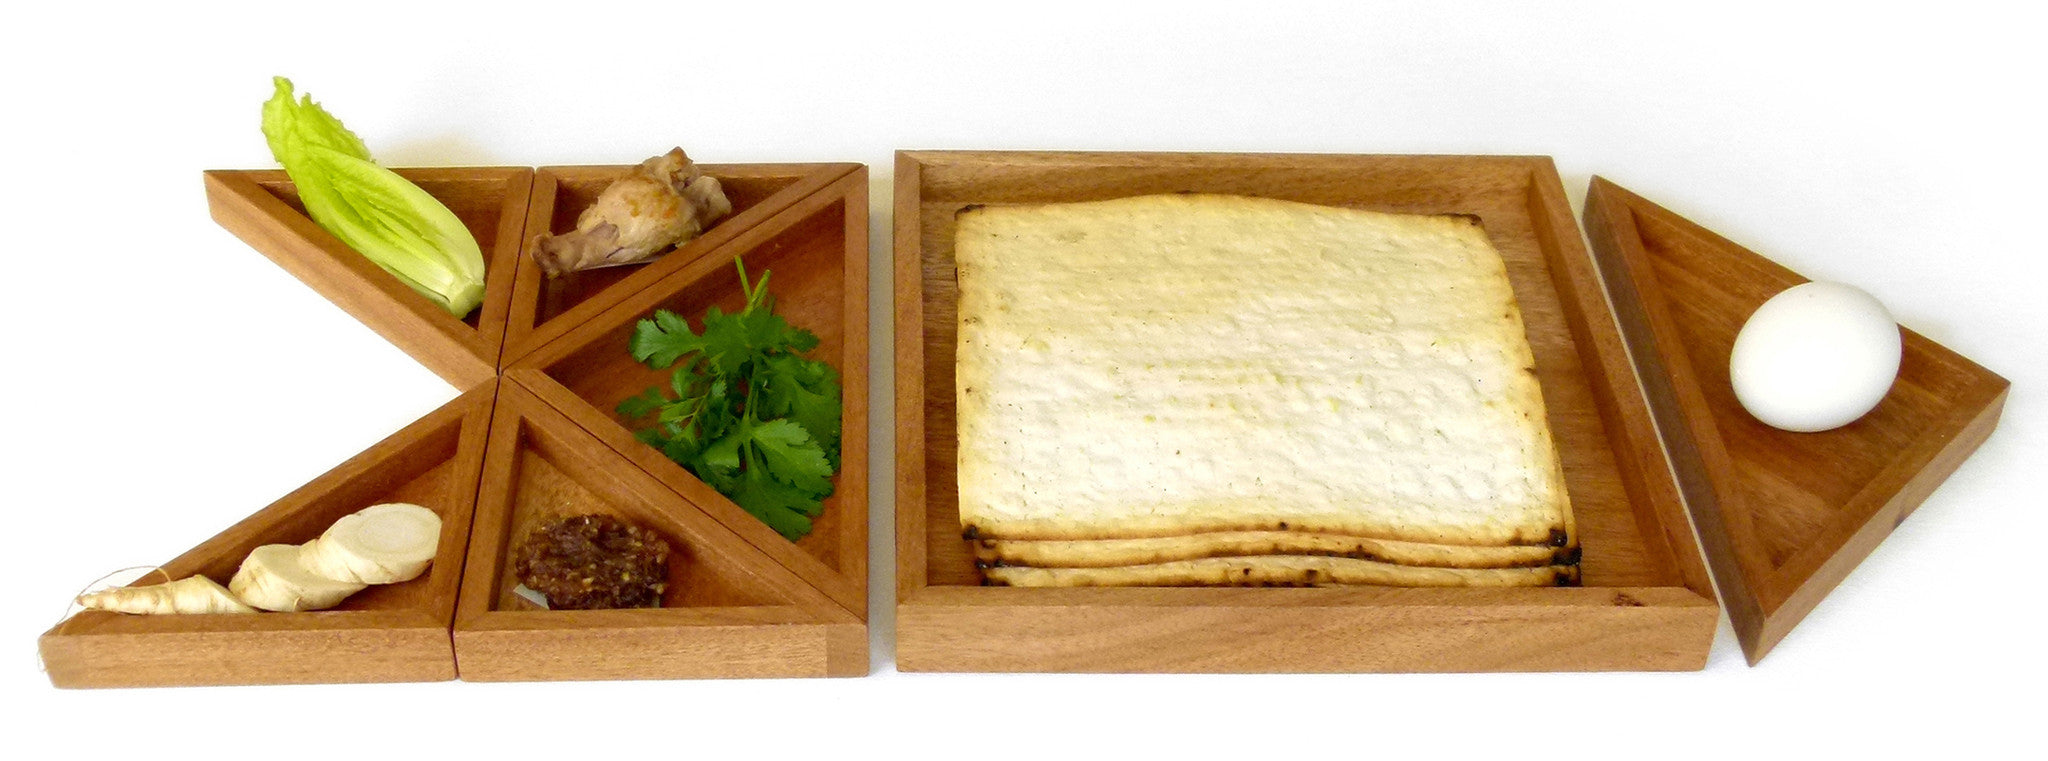 Tangram Seder plate - modern Judaica for Passover